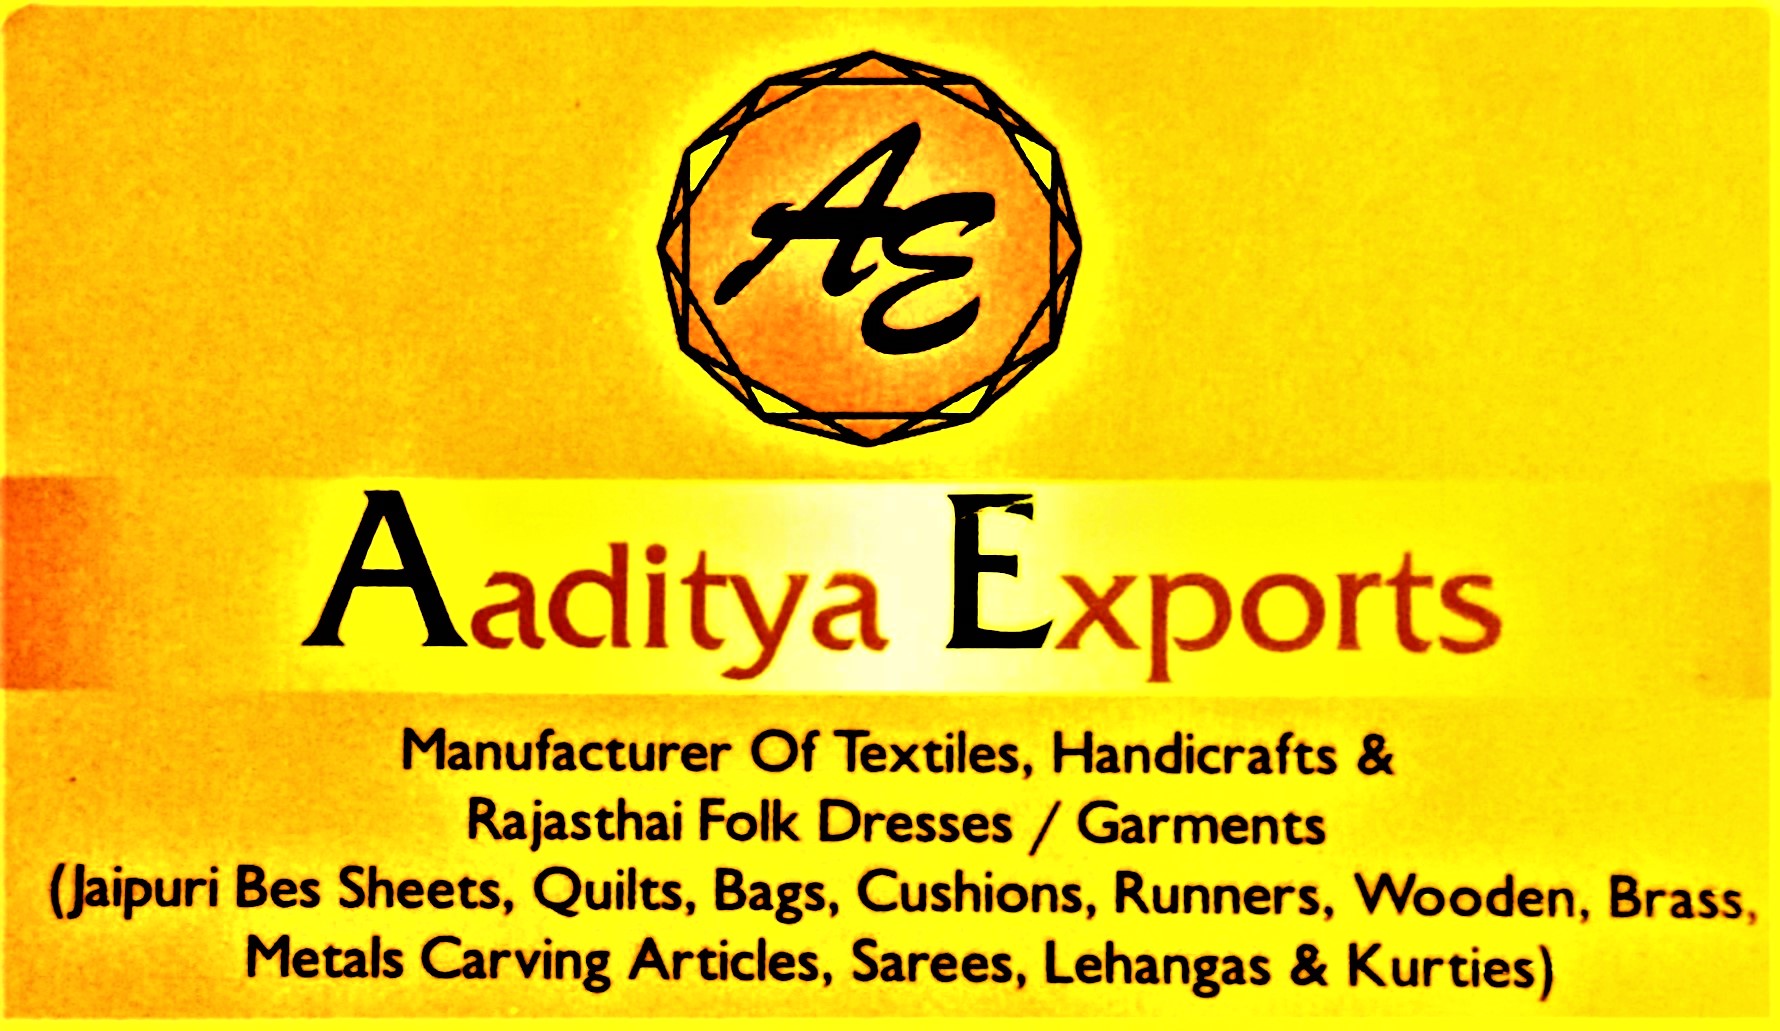 AADITYA EXPORTS